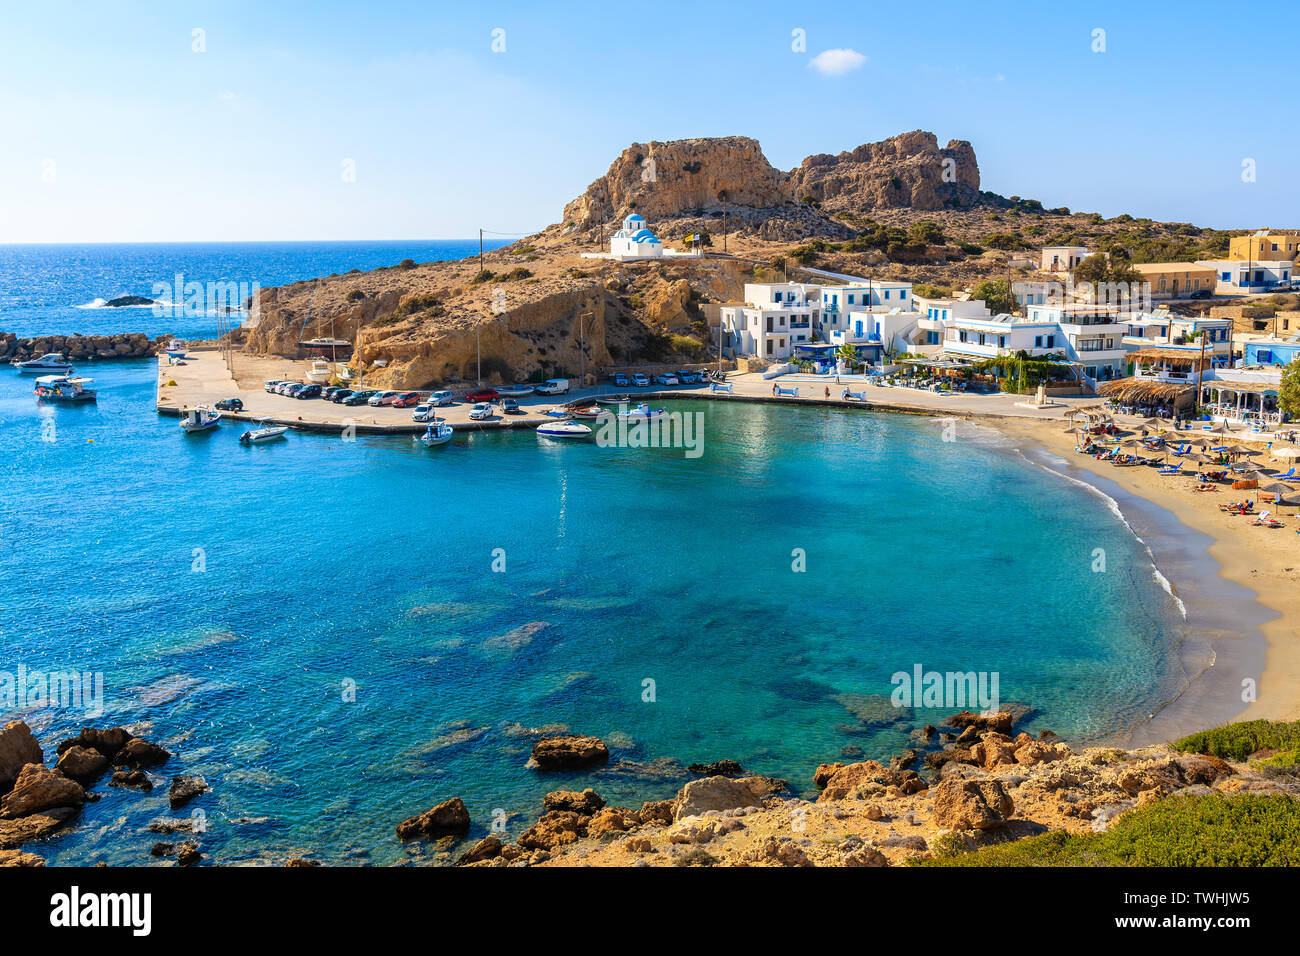 View of Finiki port and beach, Karpathos island, Greece Stock Photo